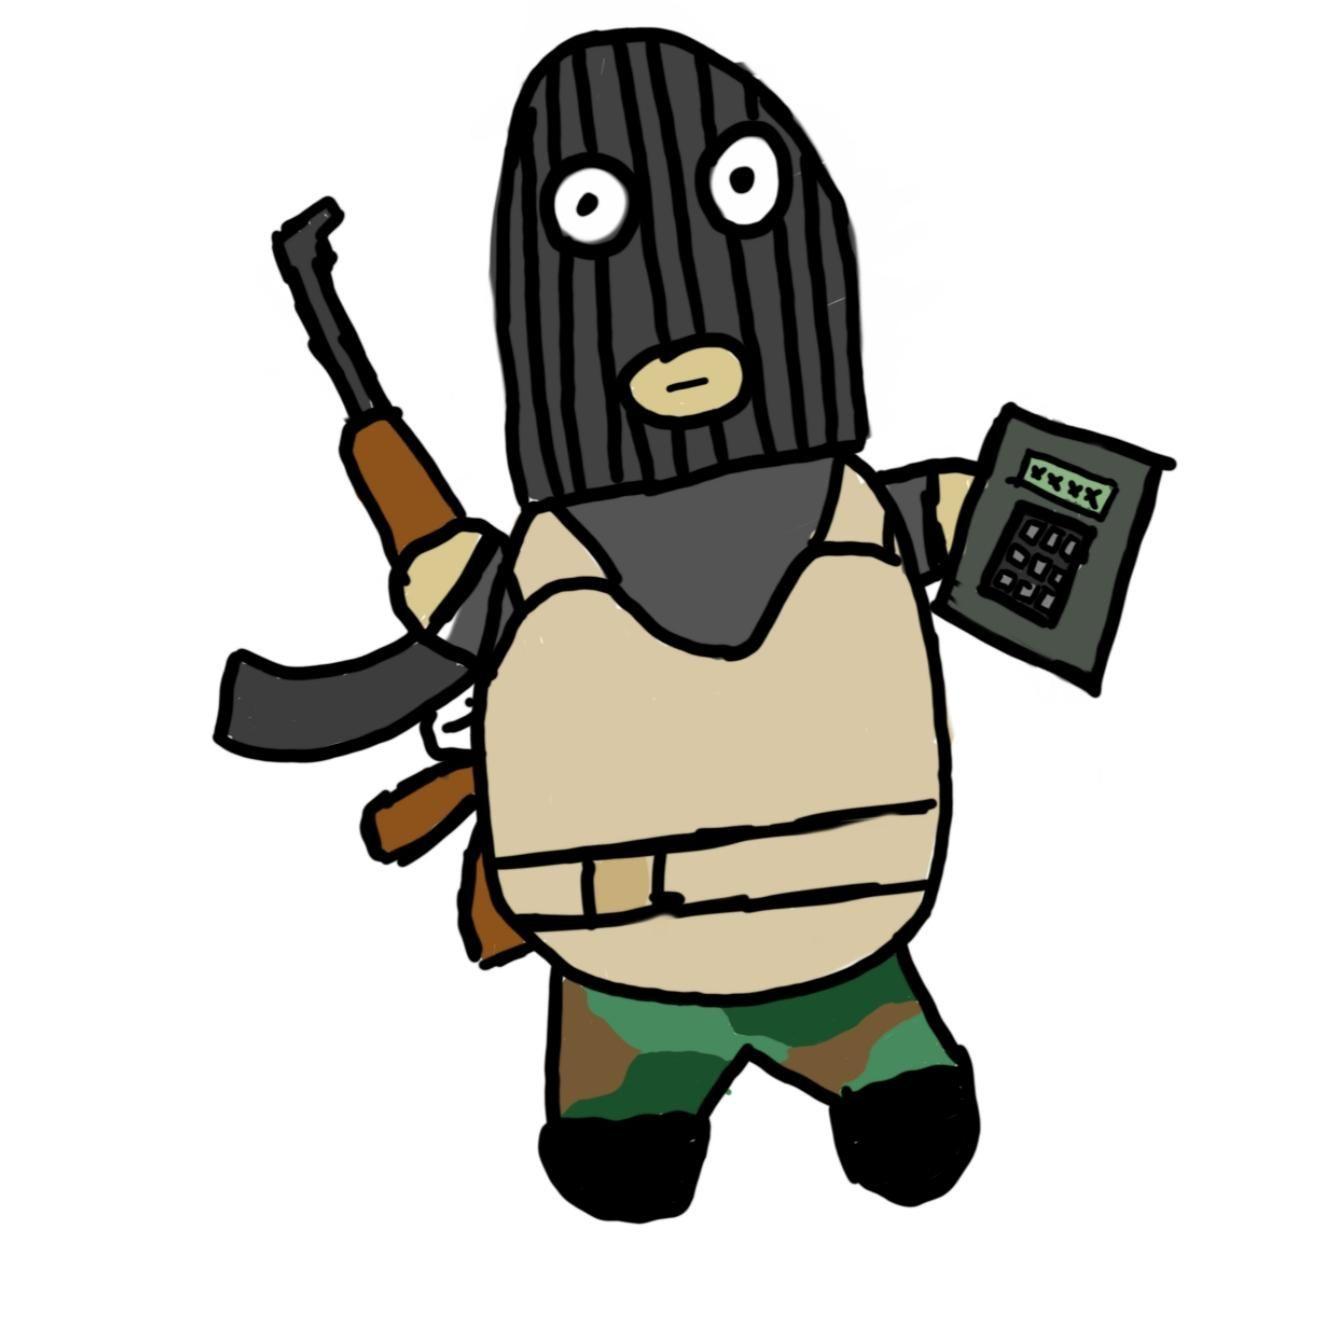 Player killemaws avatar